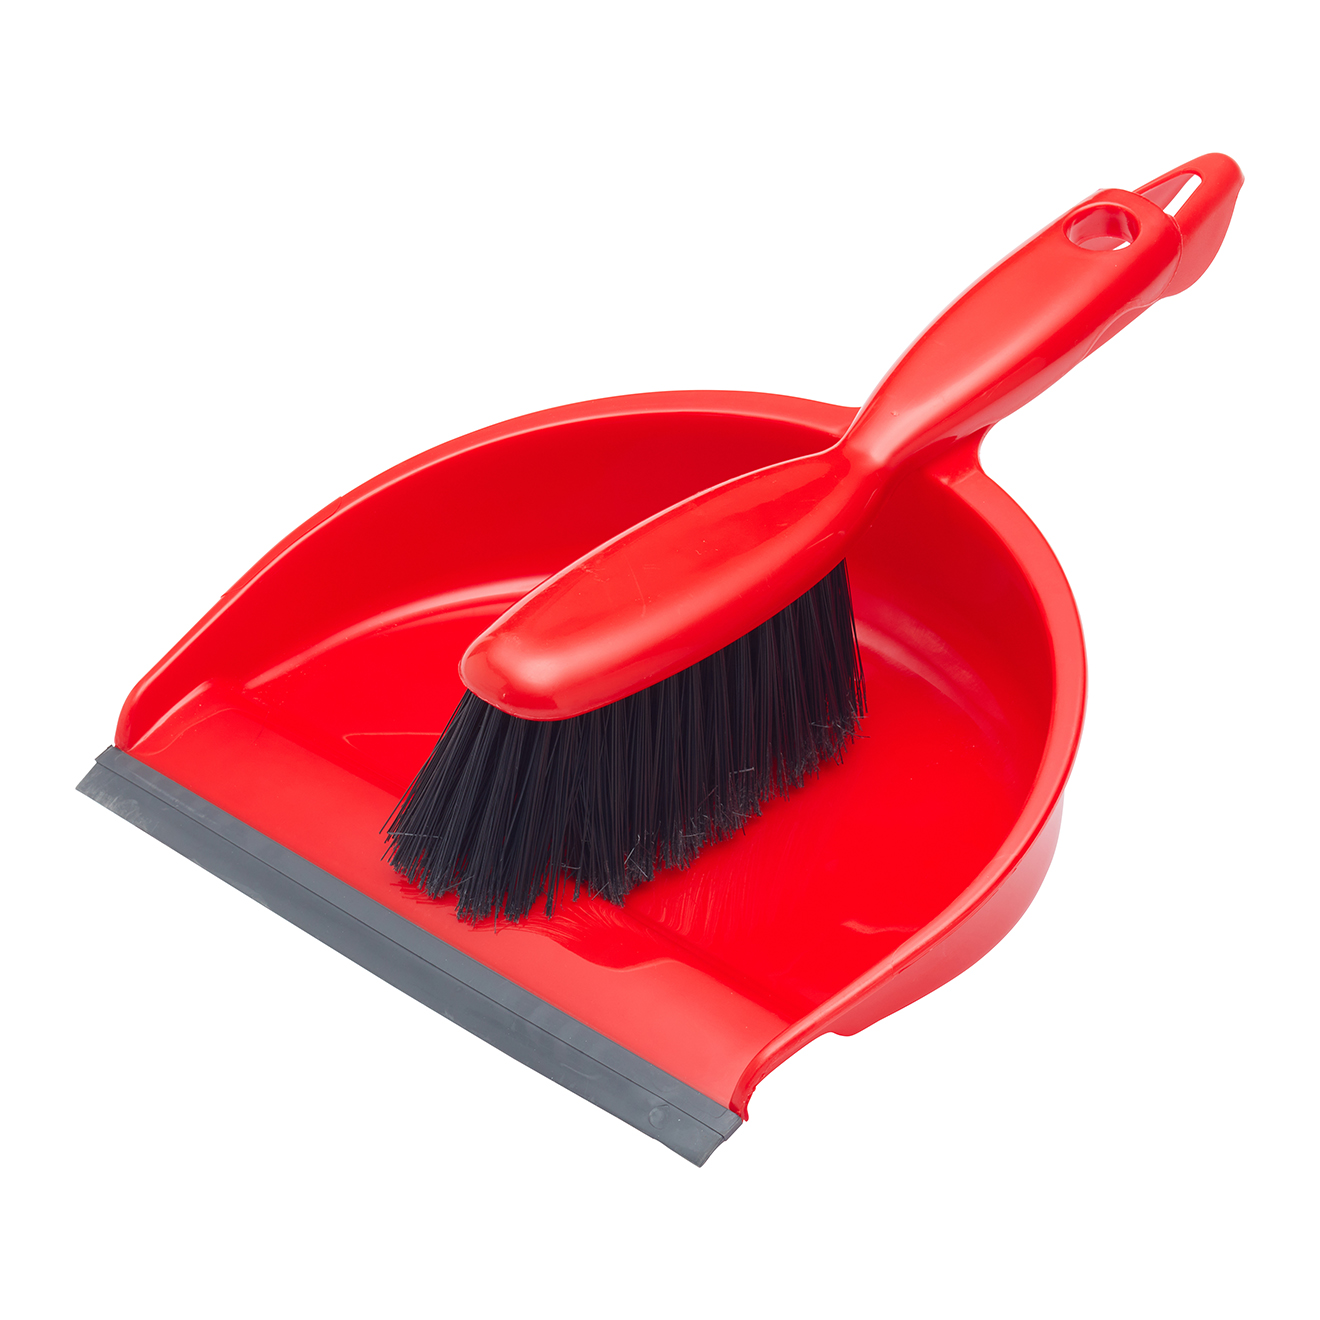 Dust Pan & Brush Set In Red